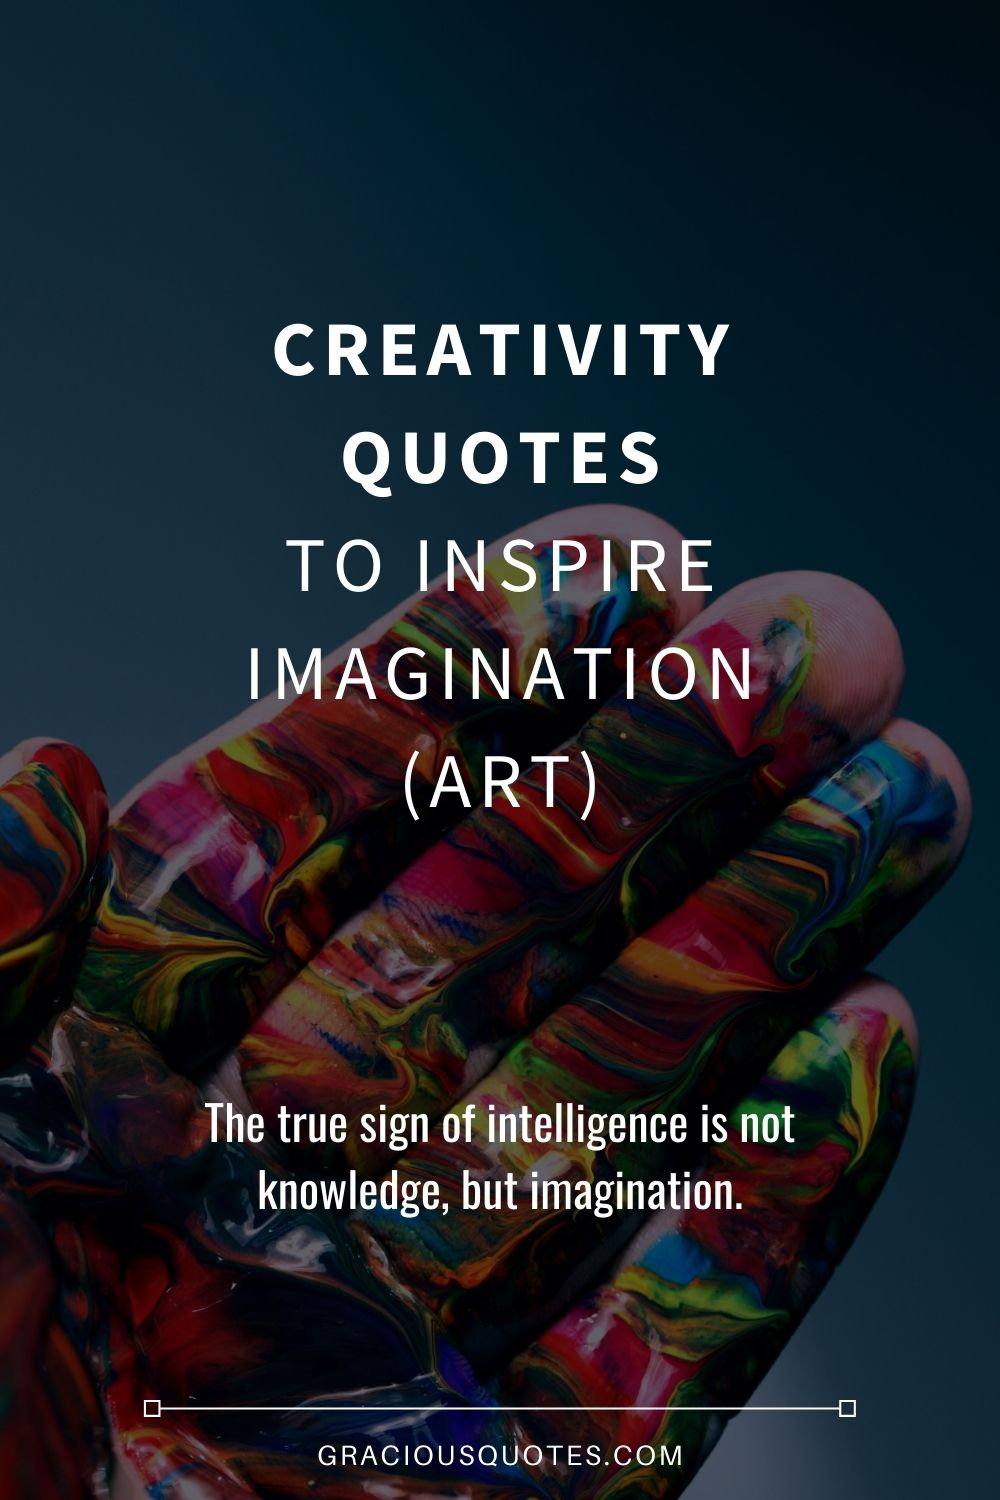 Creativity Quotes to Inspire Imagination (ART) - Gracious Quotes